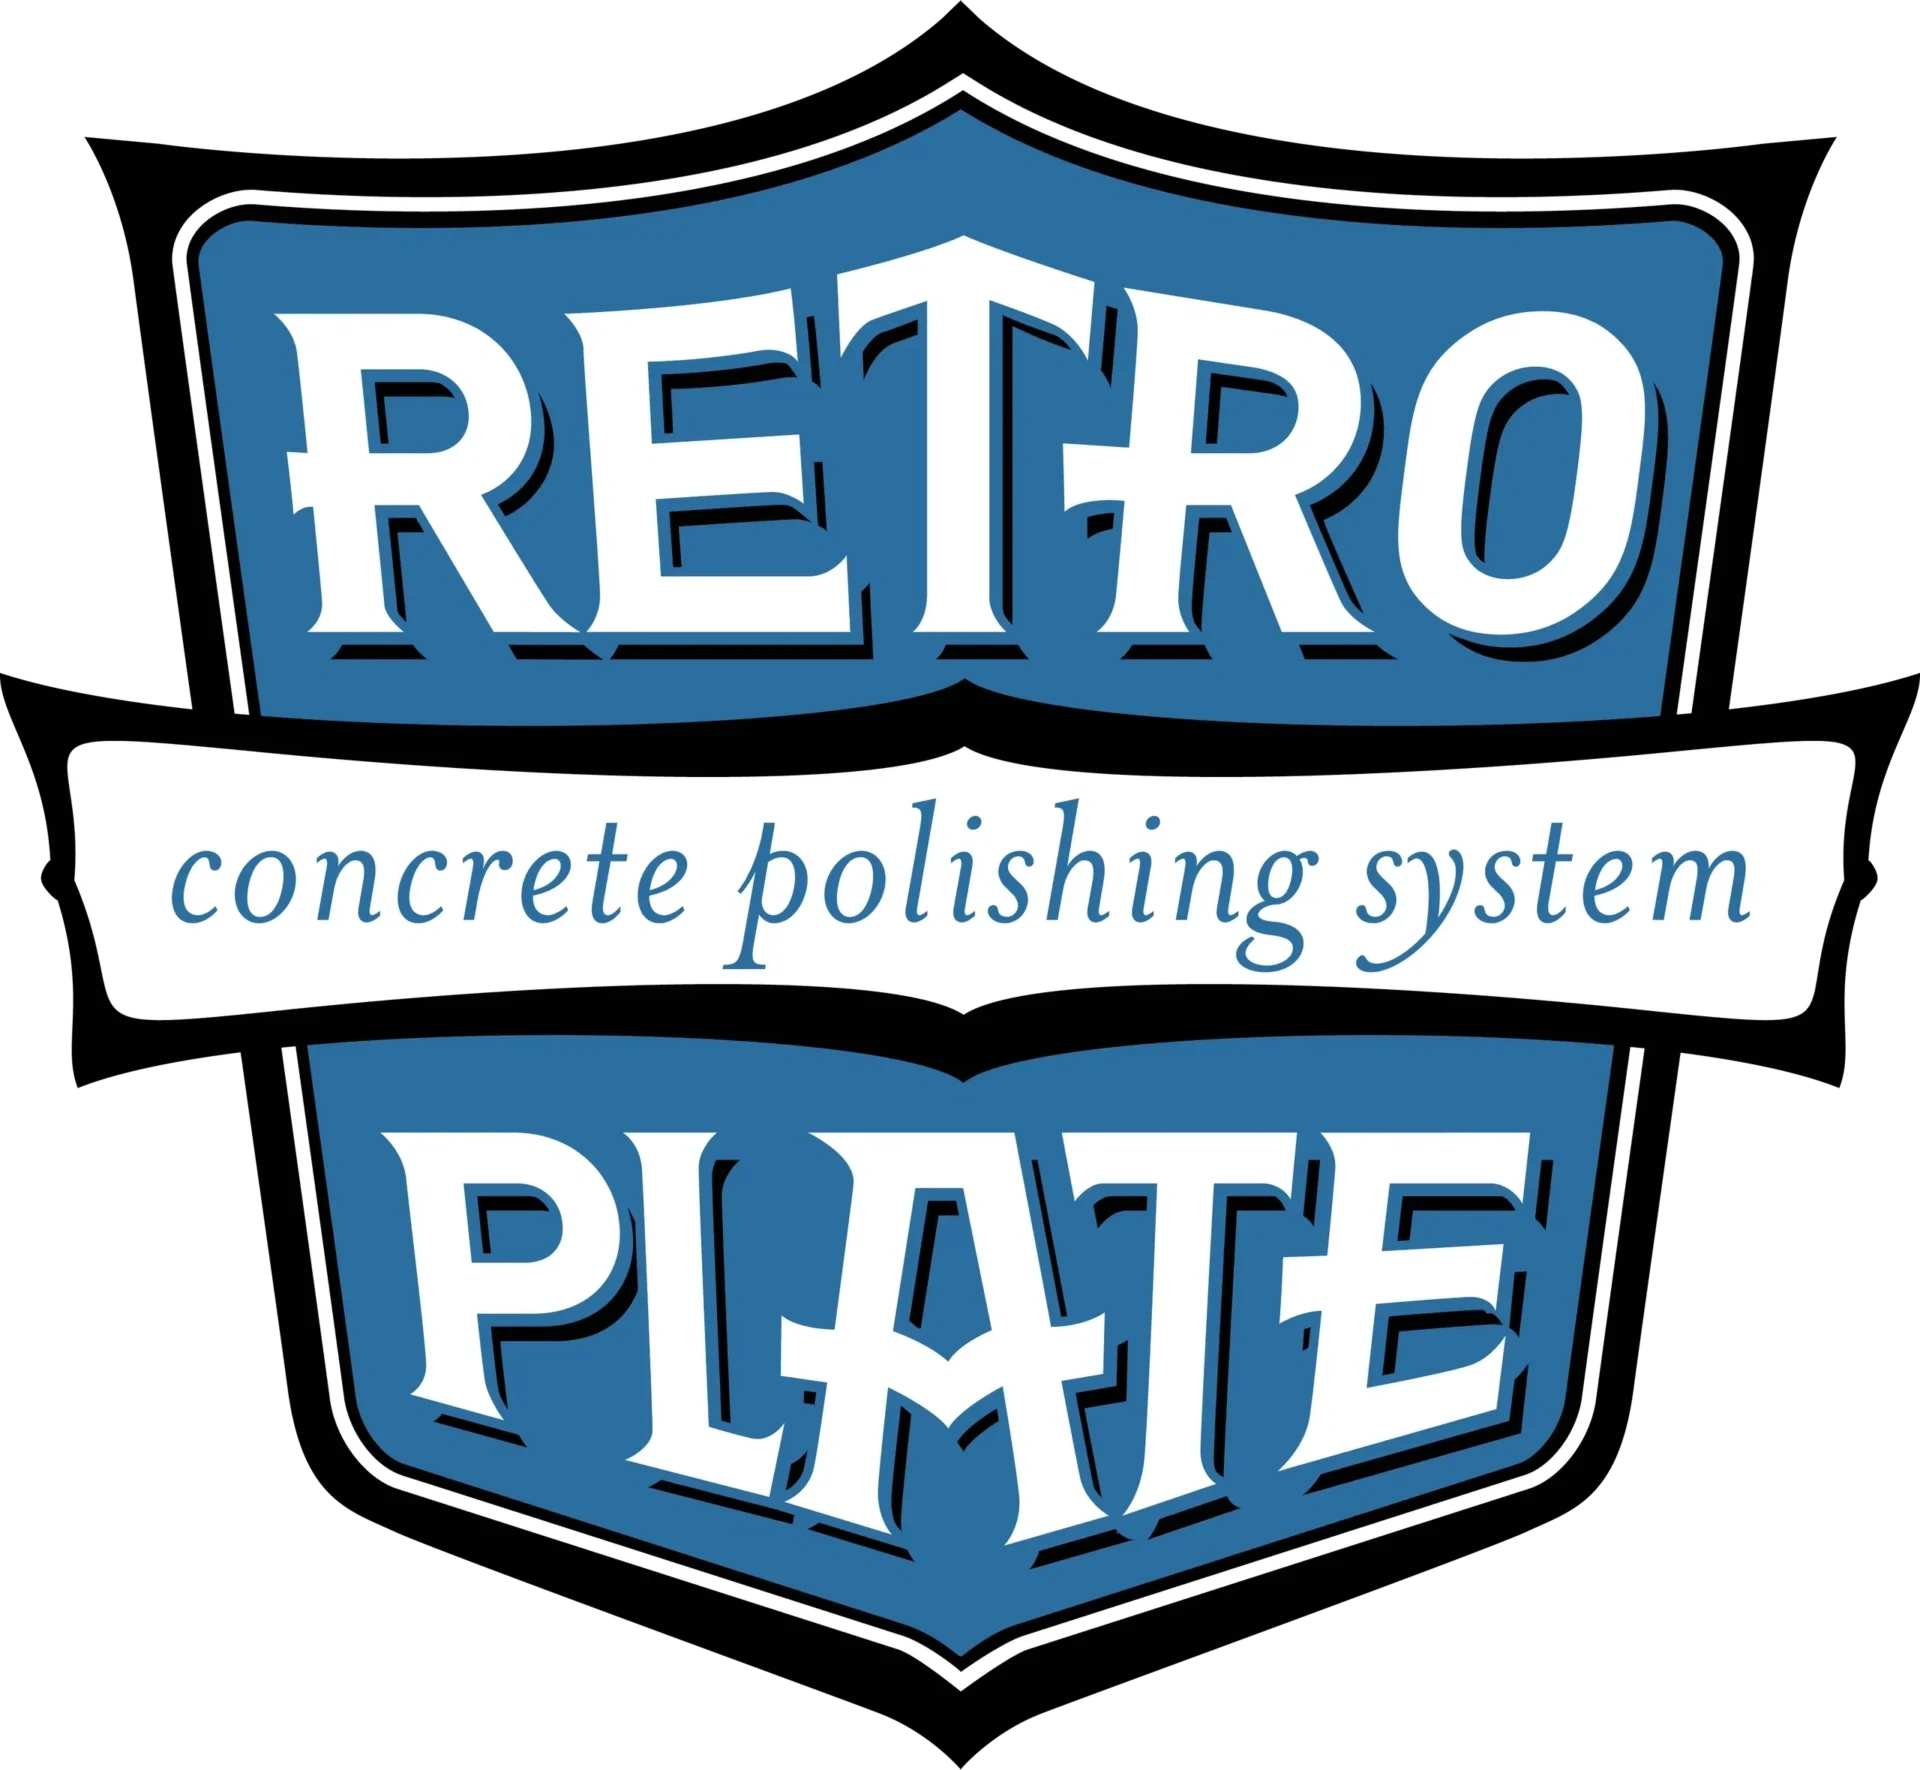 A blue and white logo for retro plate.